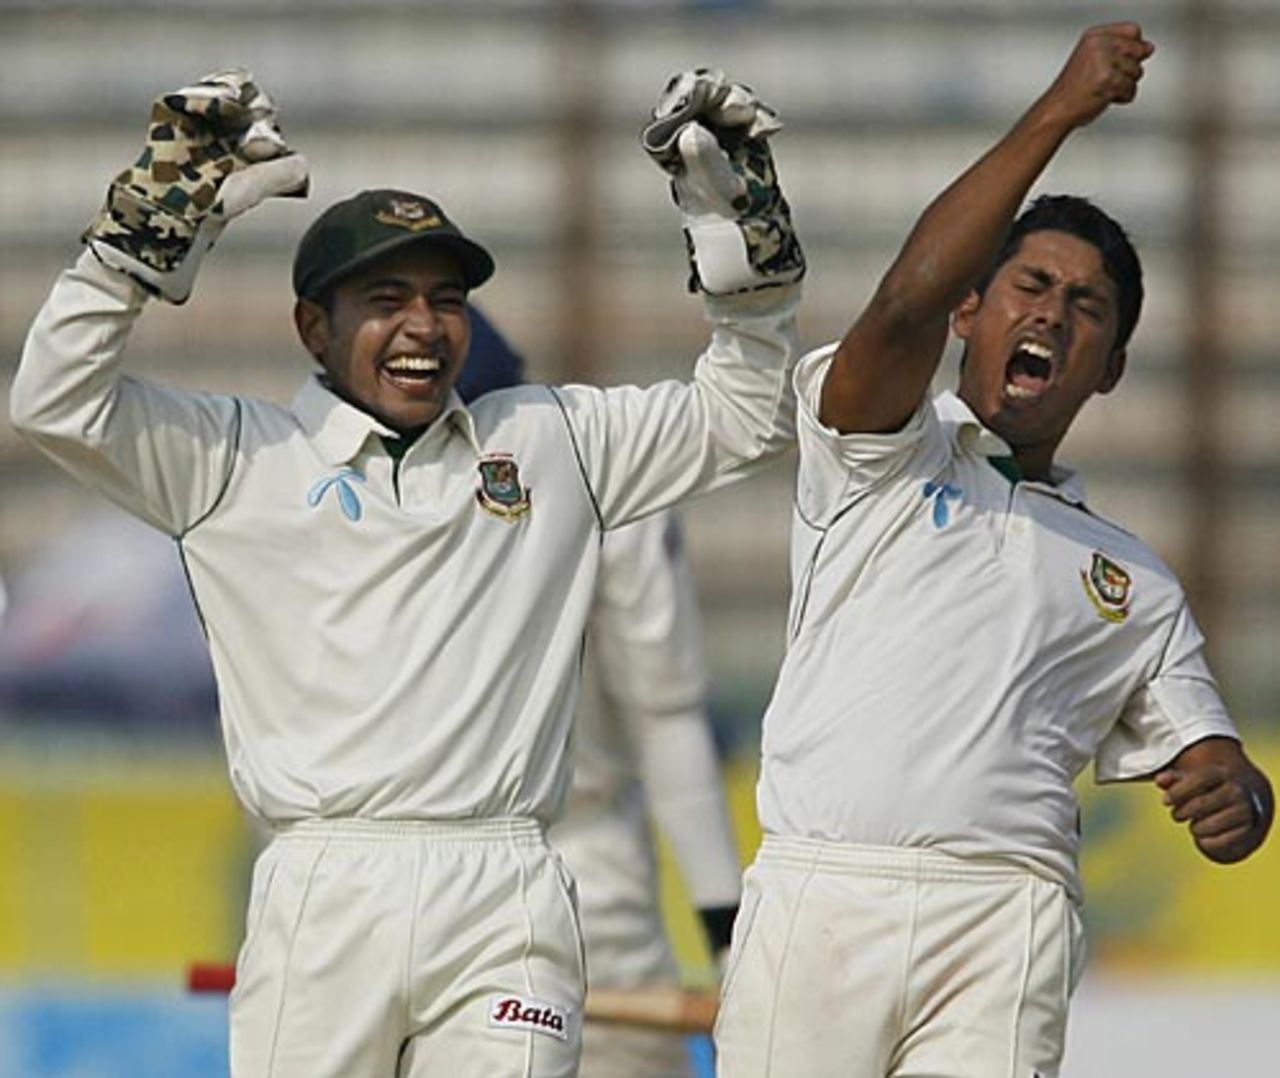 Mohammad Ashraful lets out a war cry after dismissing Kumar Sangakkara, Bangladesh v Sri Lanka, 2nd Test, Chittagong, 3rd day, January 5, 2008